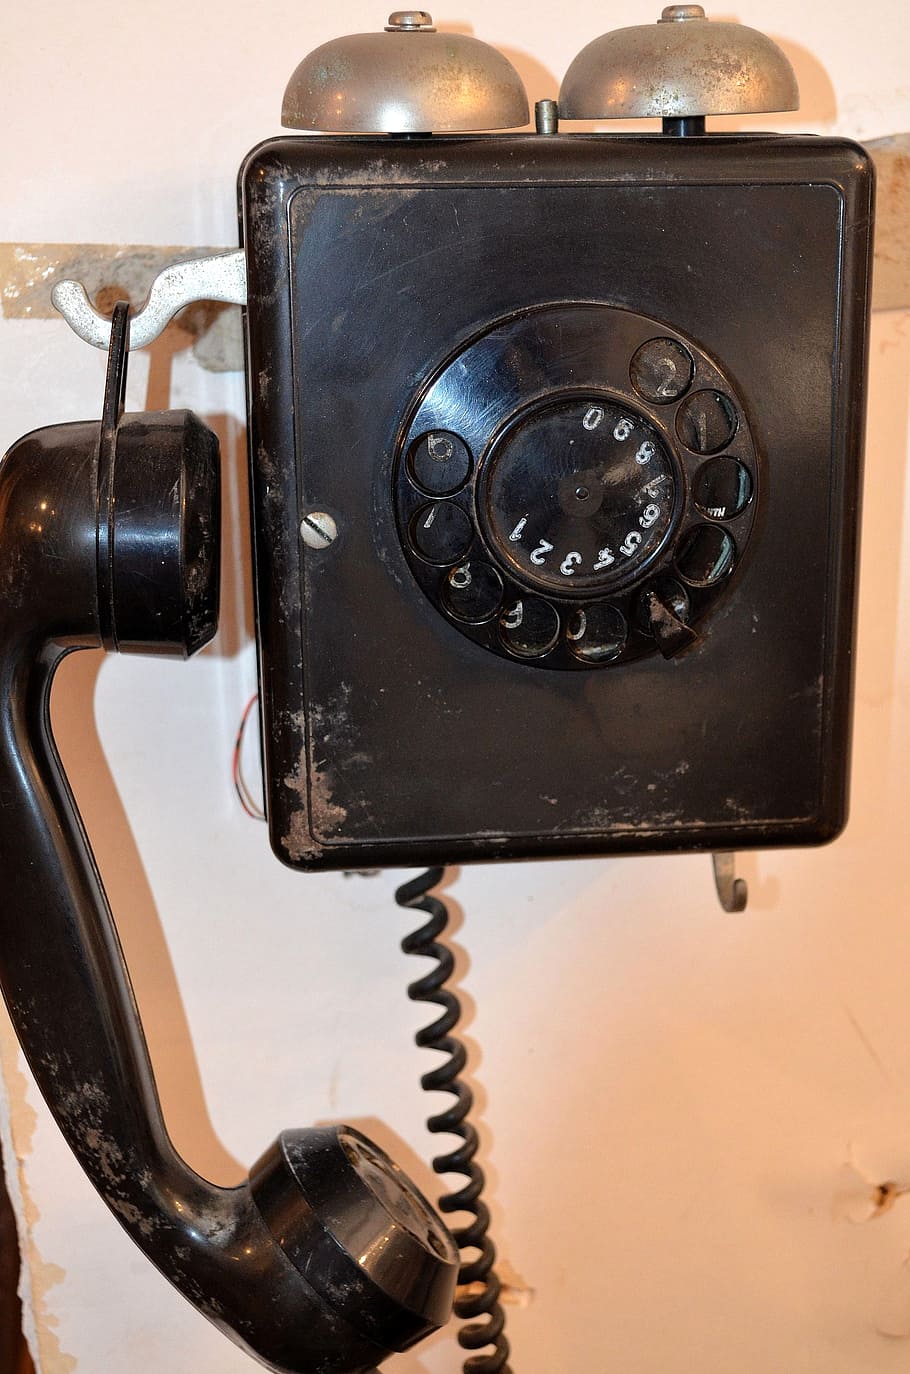 Old, Phone, Dial, Vintage, Telephone, old phone, landline phone, nostalgia, telephone handset, analog